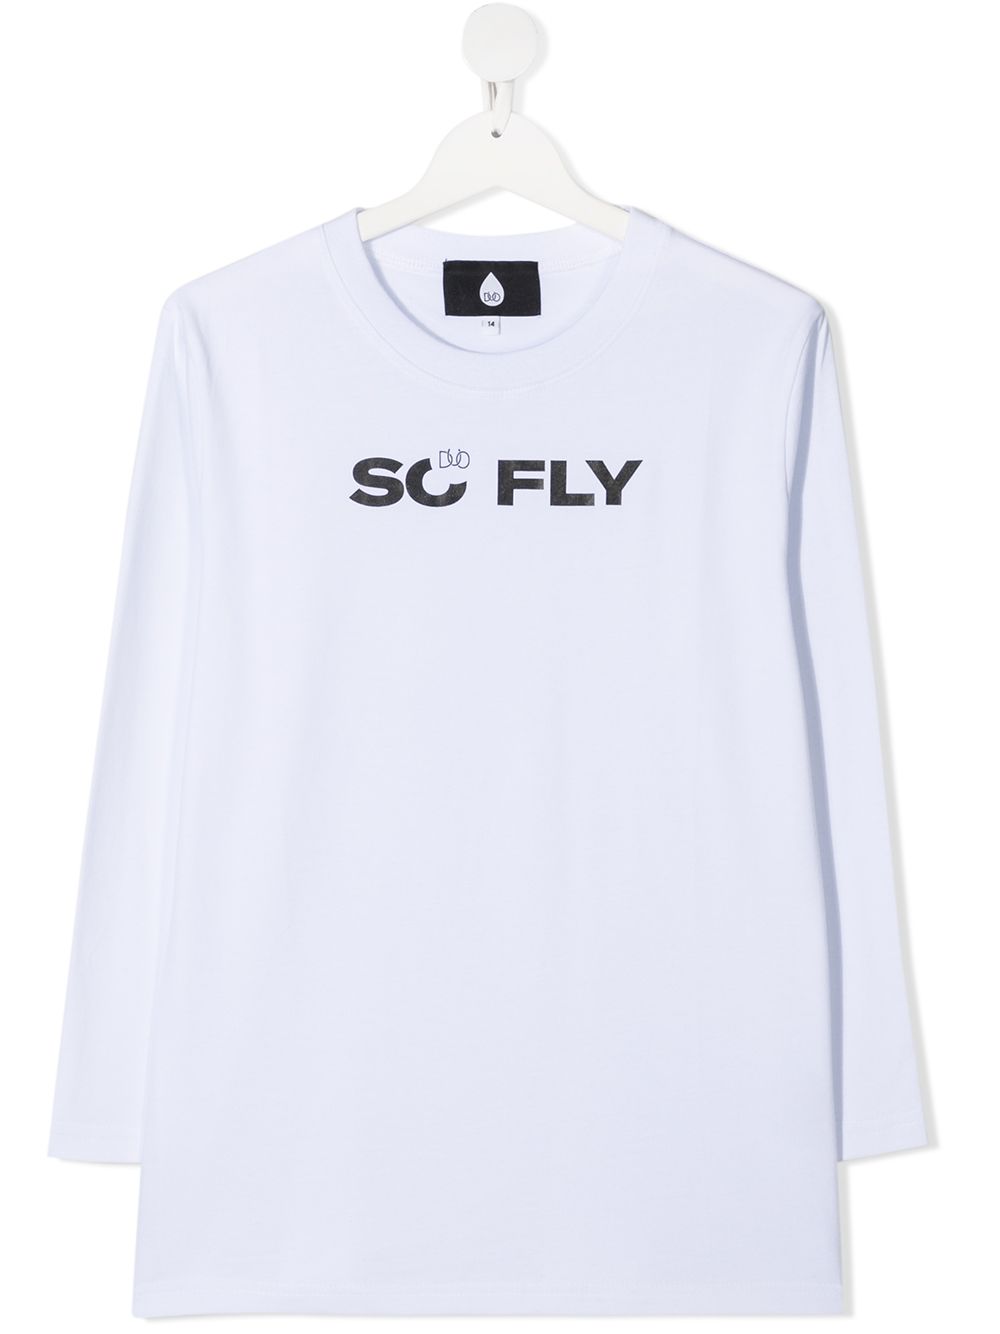 DUOltd So Fly T-shirt - White von DUOltd